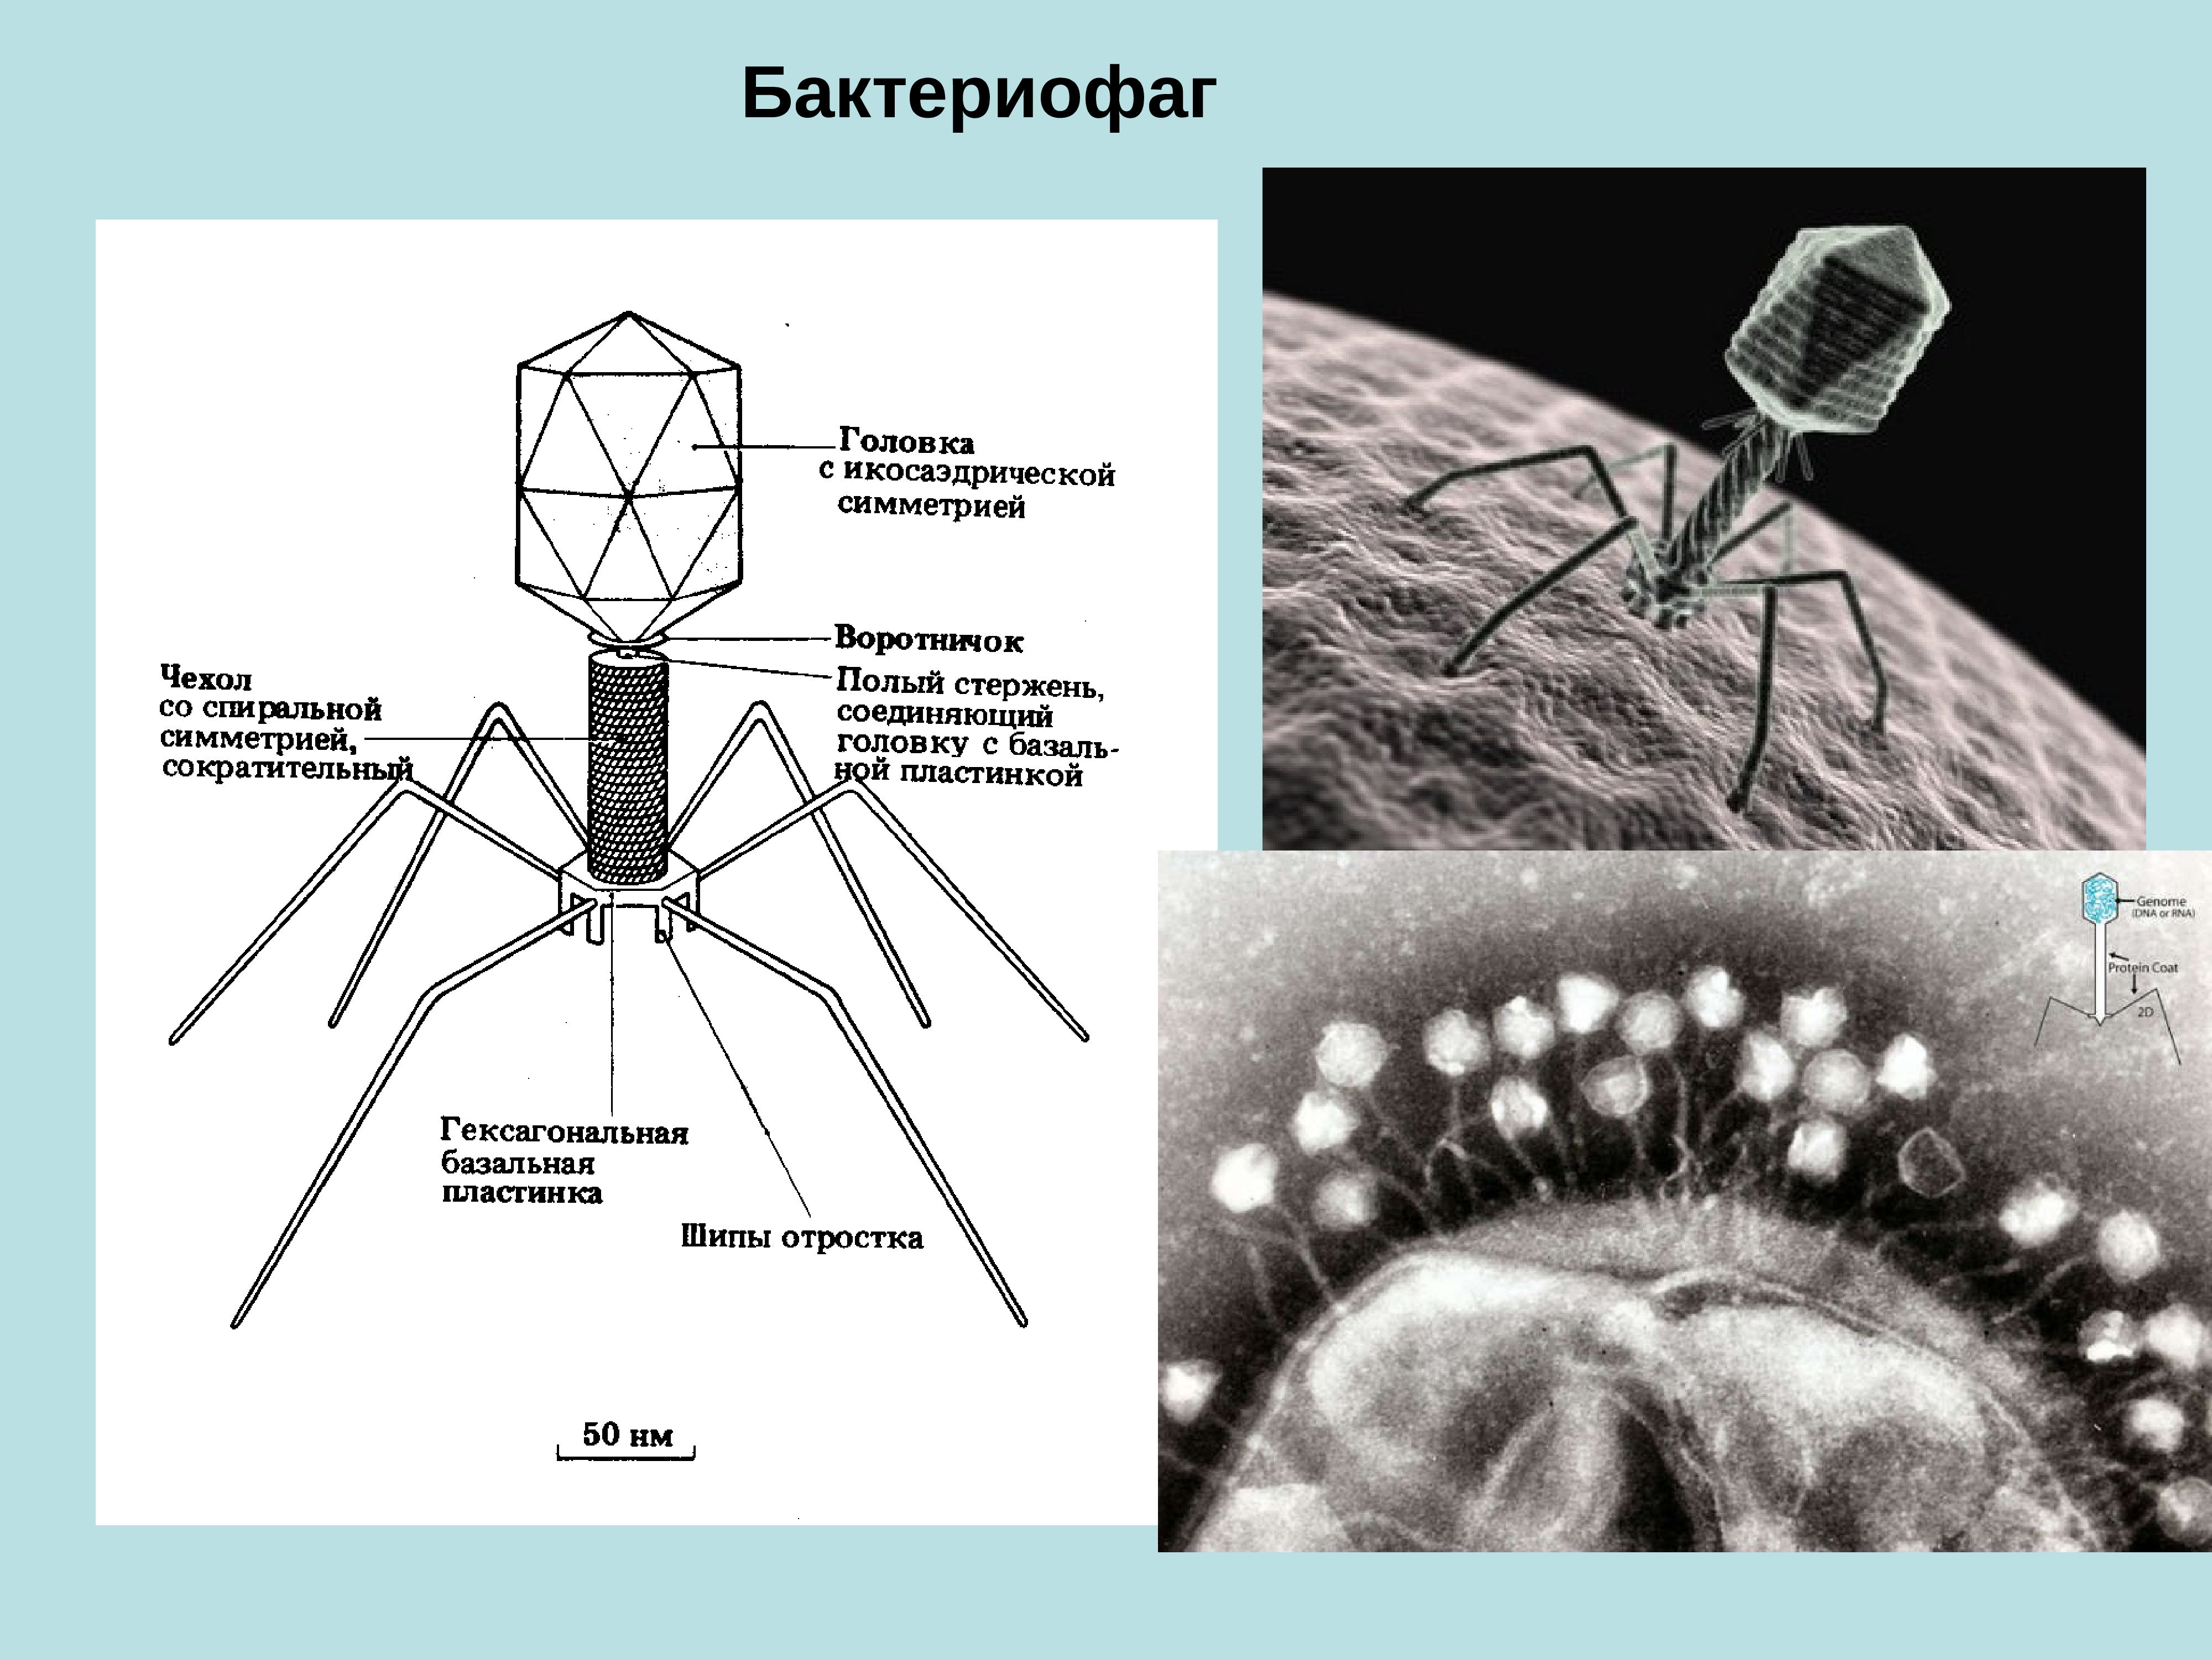 Наследственный аппарат вируса формы жизни бактериофаги. Капсид бактериофага. Строение бактериофага микробиология. Бактериофаги Myoviridae. Строение фага микробиология.